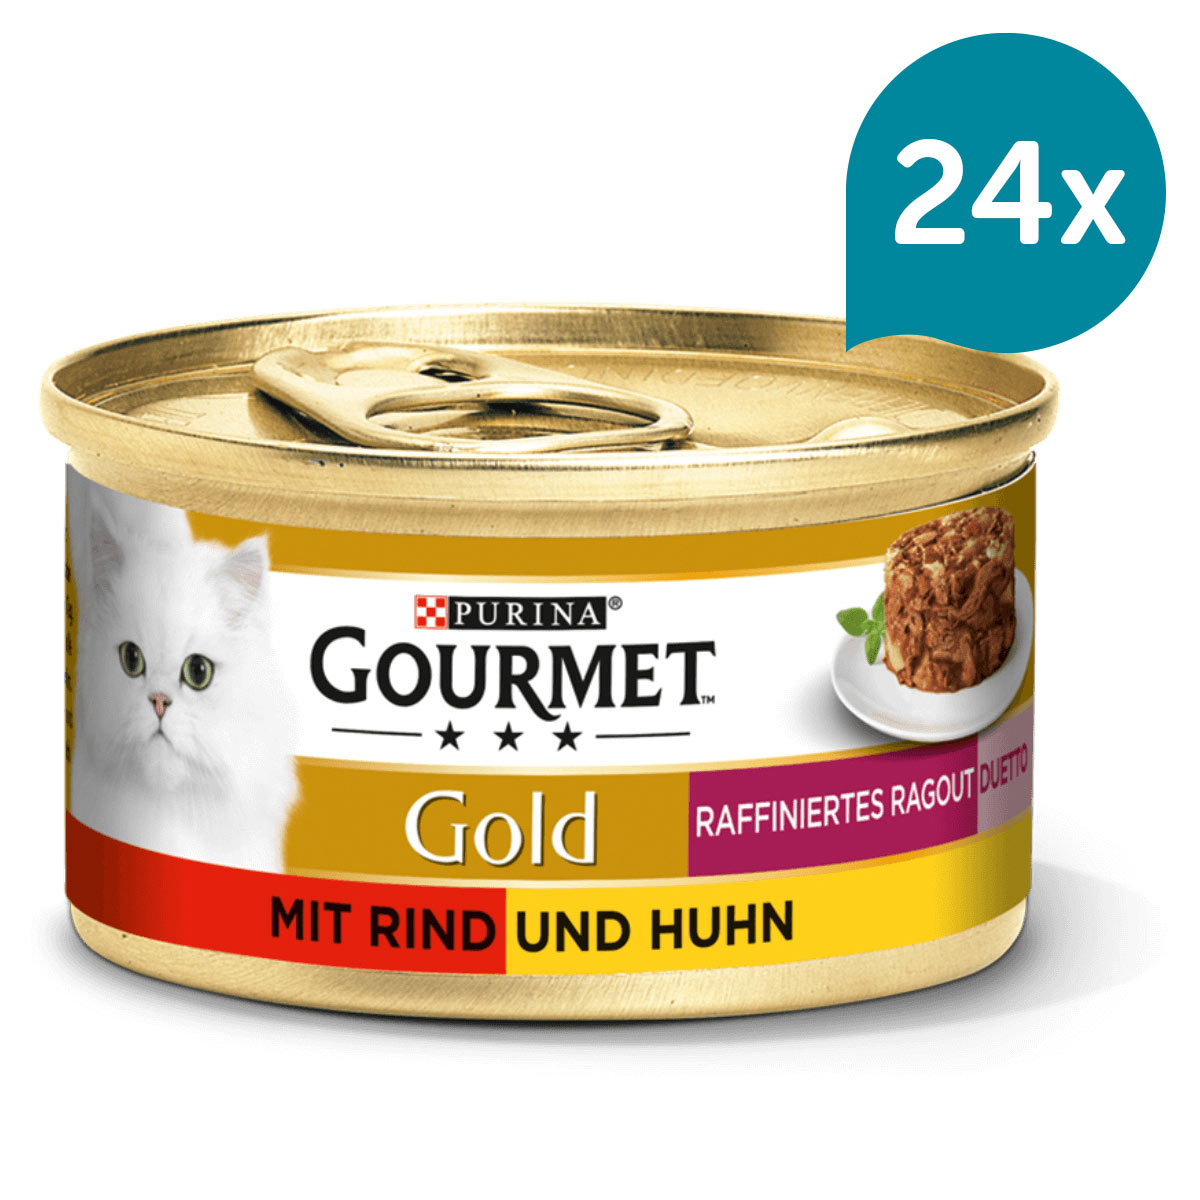 GOURMET Gold Raffiniertes Ragout Duetto Rind & Huhn 24x85g